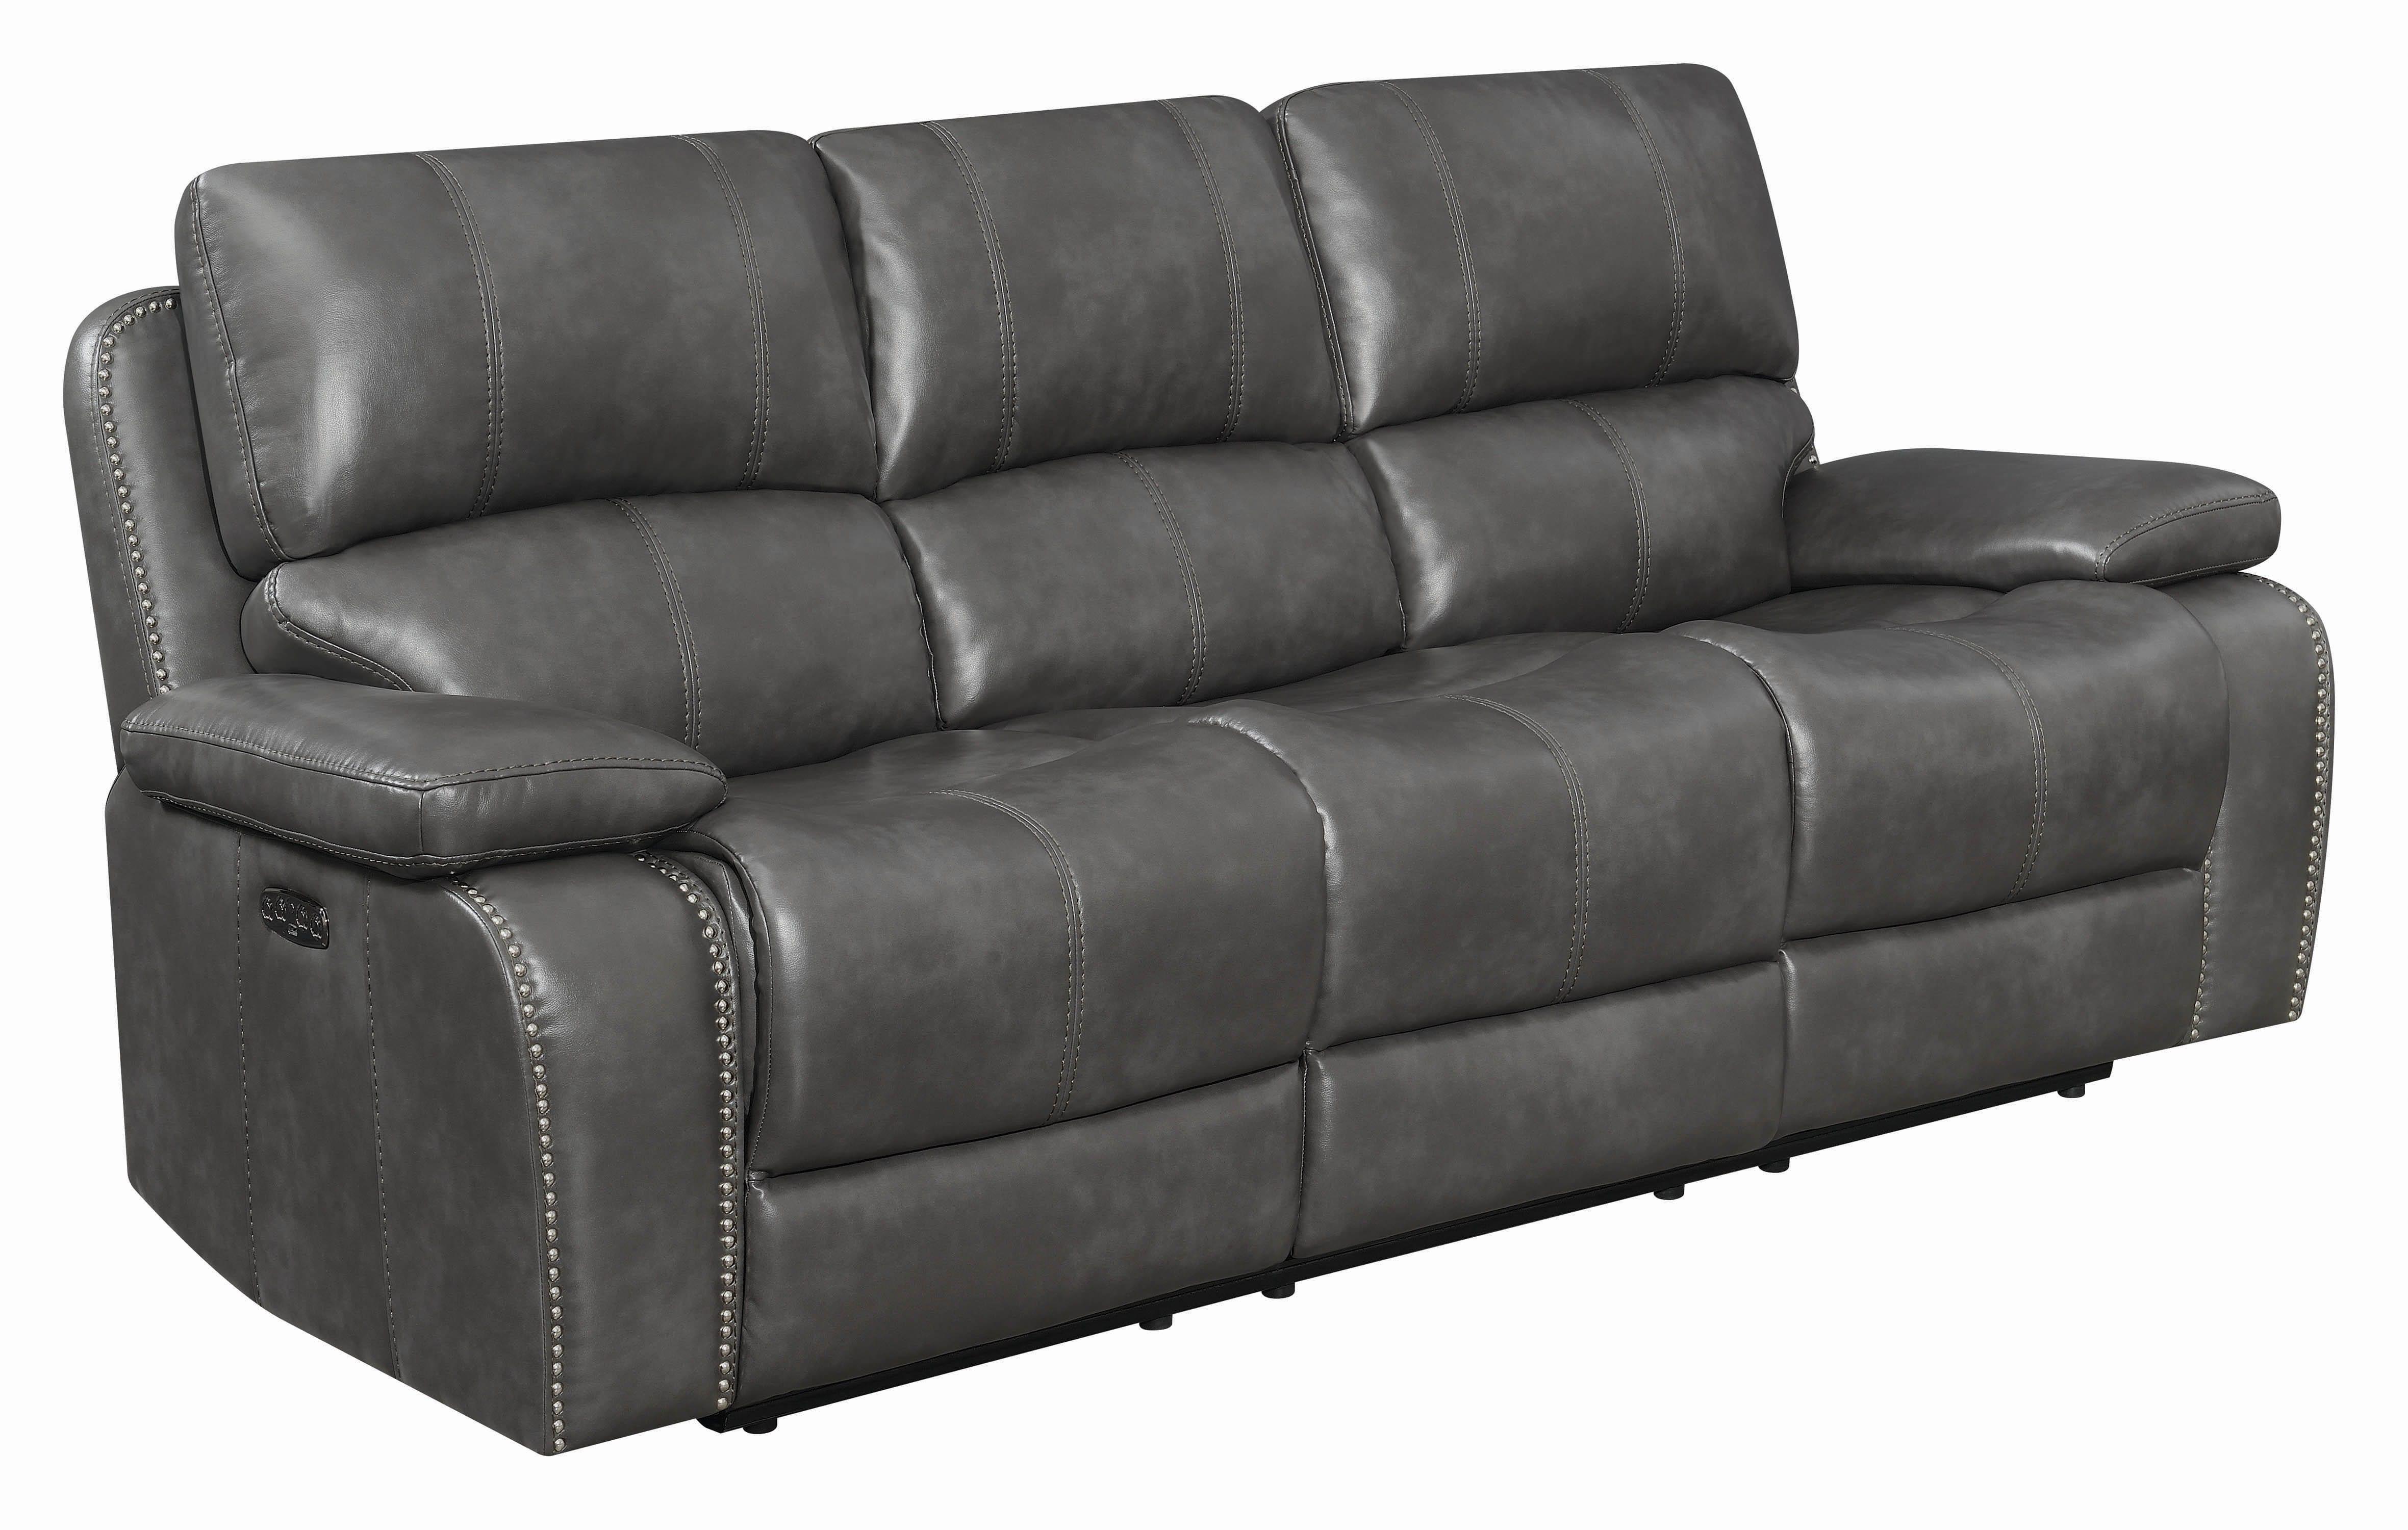 Modern Power2 sofa Ravenna 603211PP in Gray Leather